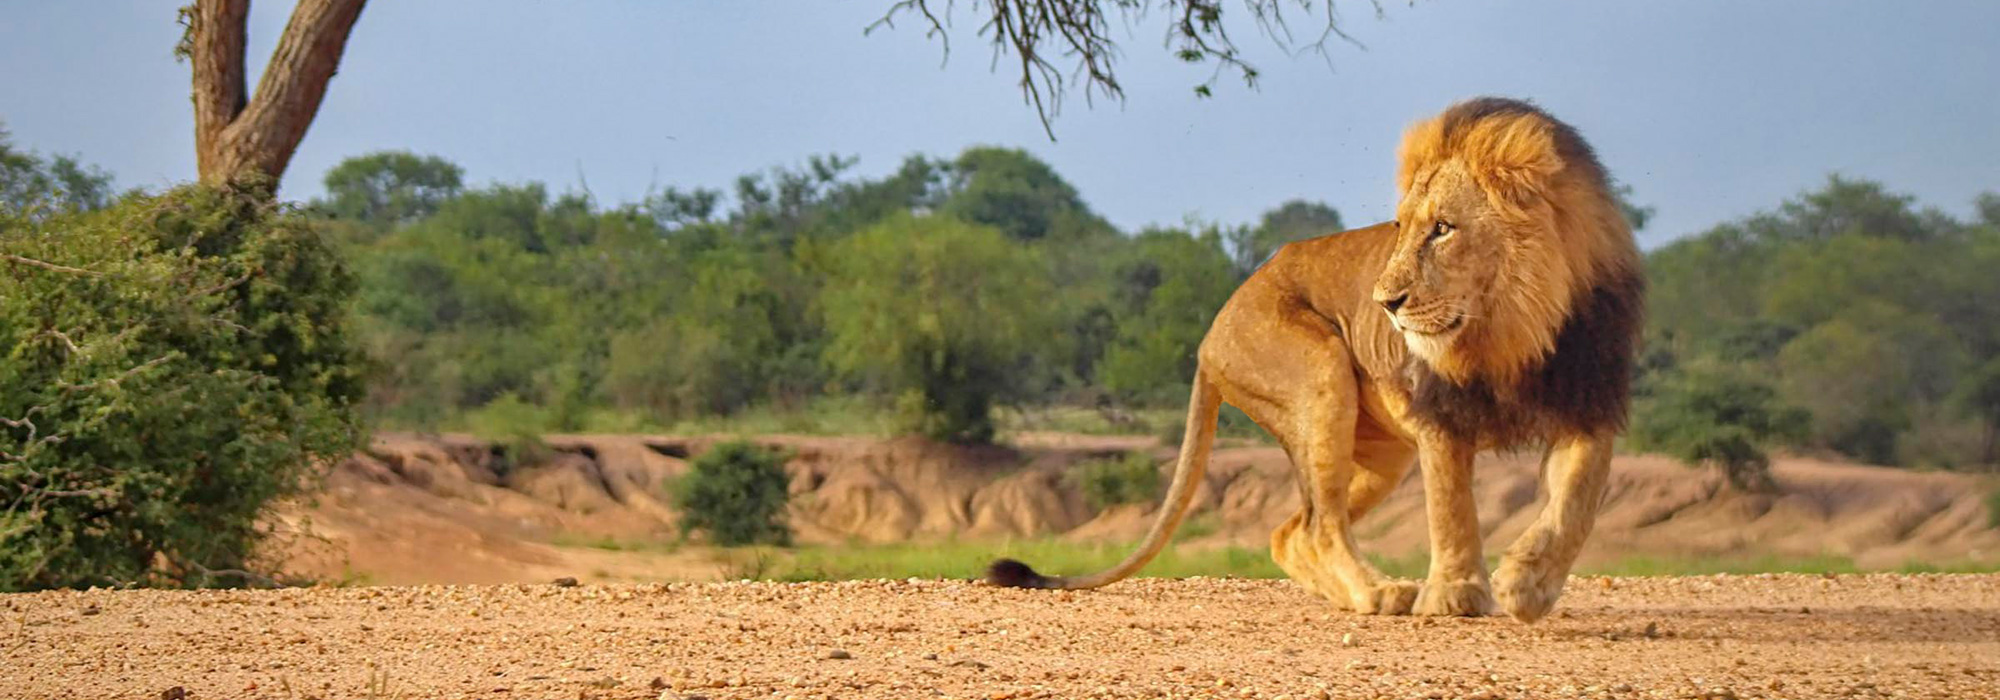 lion world travel safari reviews